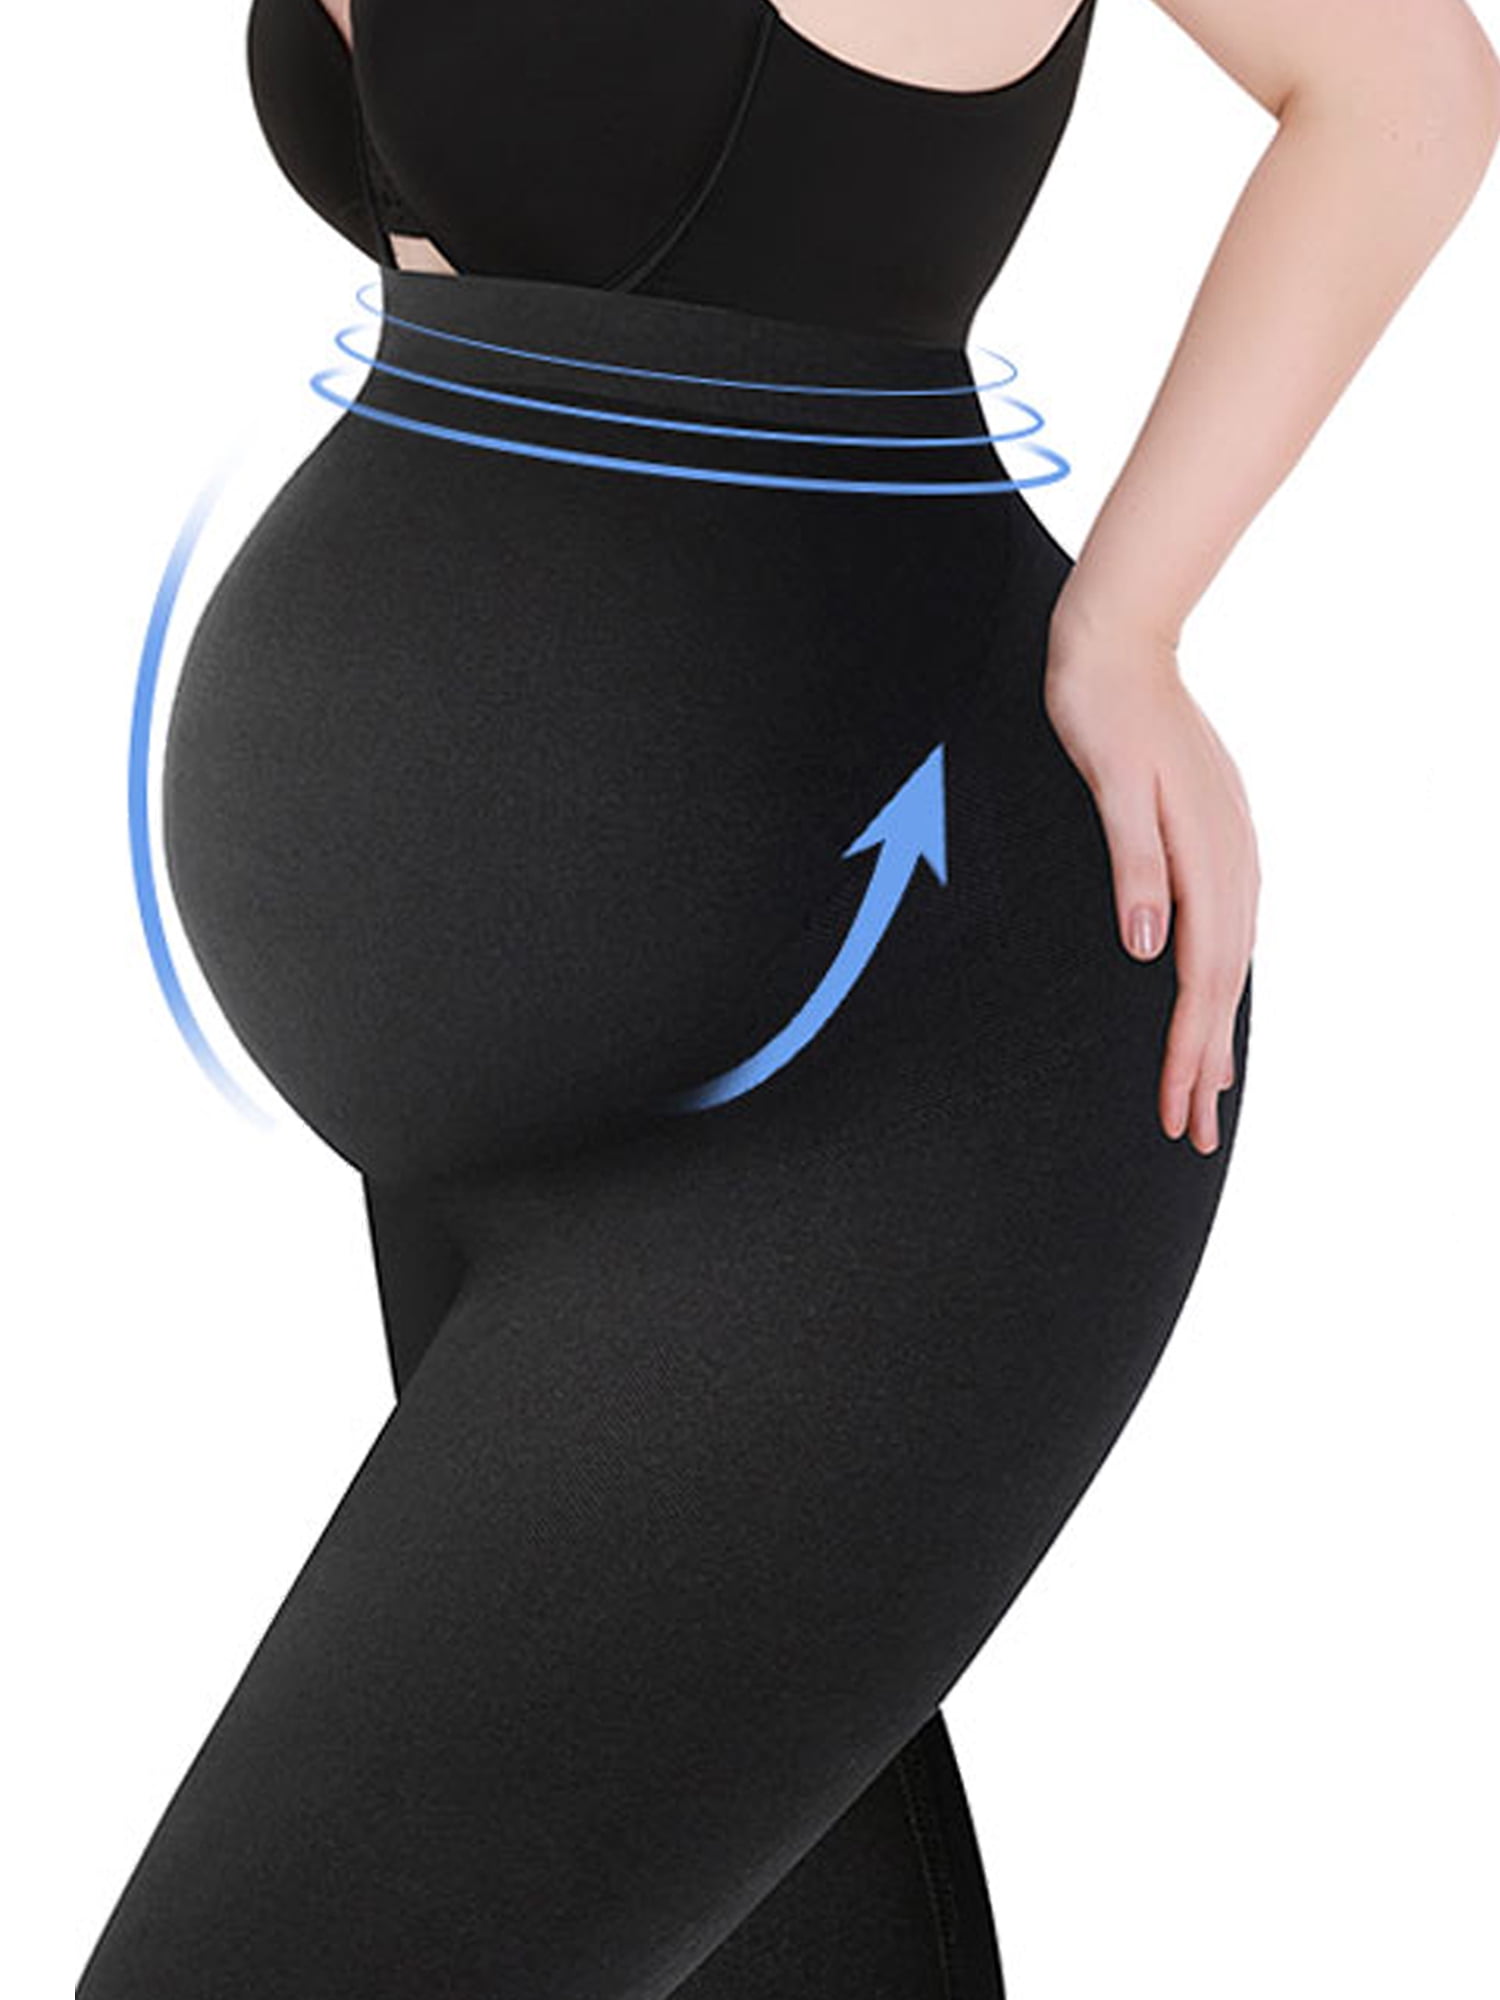 SHER Women Maternity Shapewear Seamless Pregnancy Belly Support Underwear High Waist Thigh Shaper Panty Over Bump